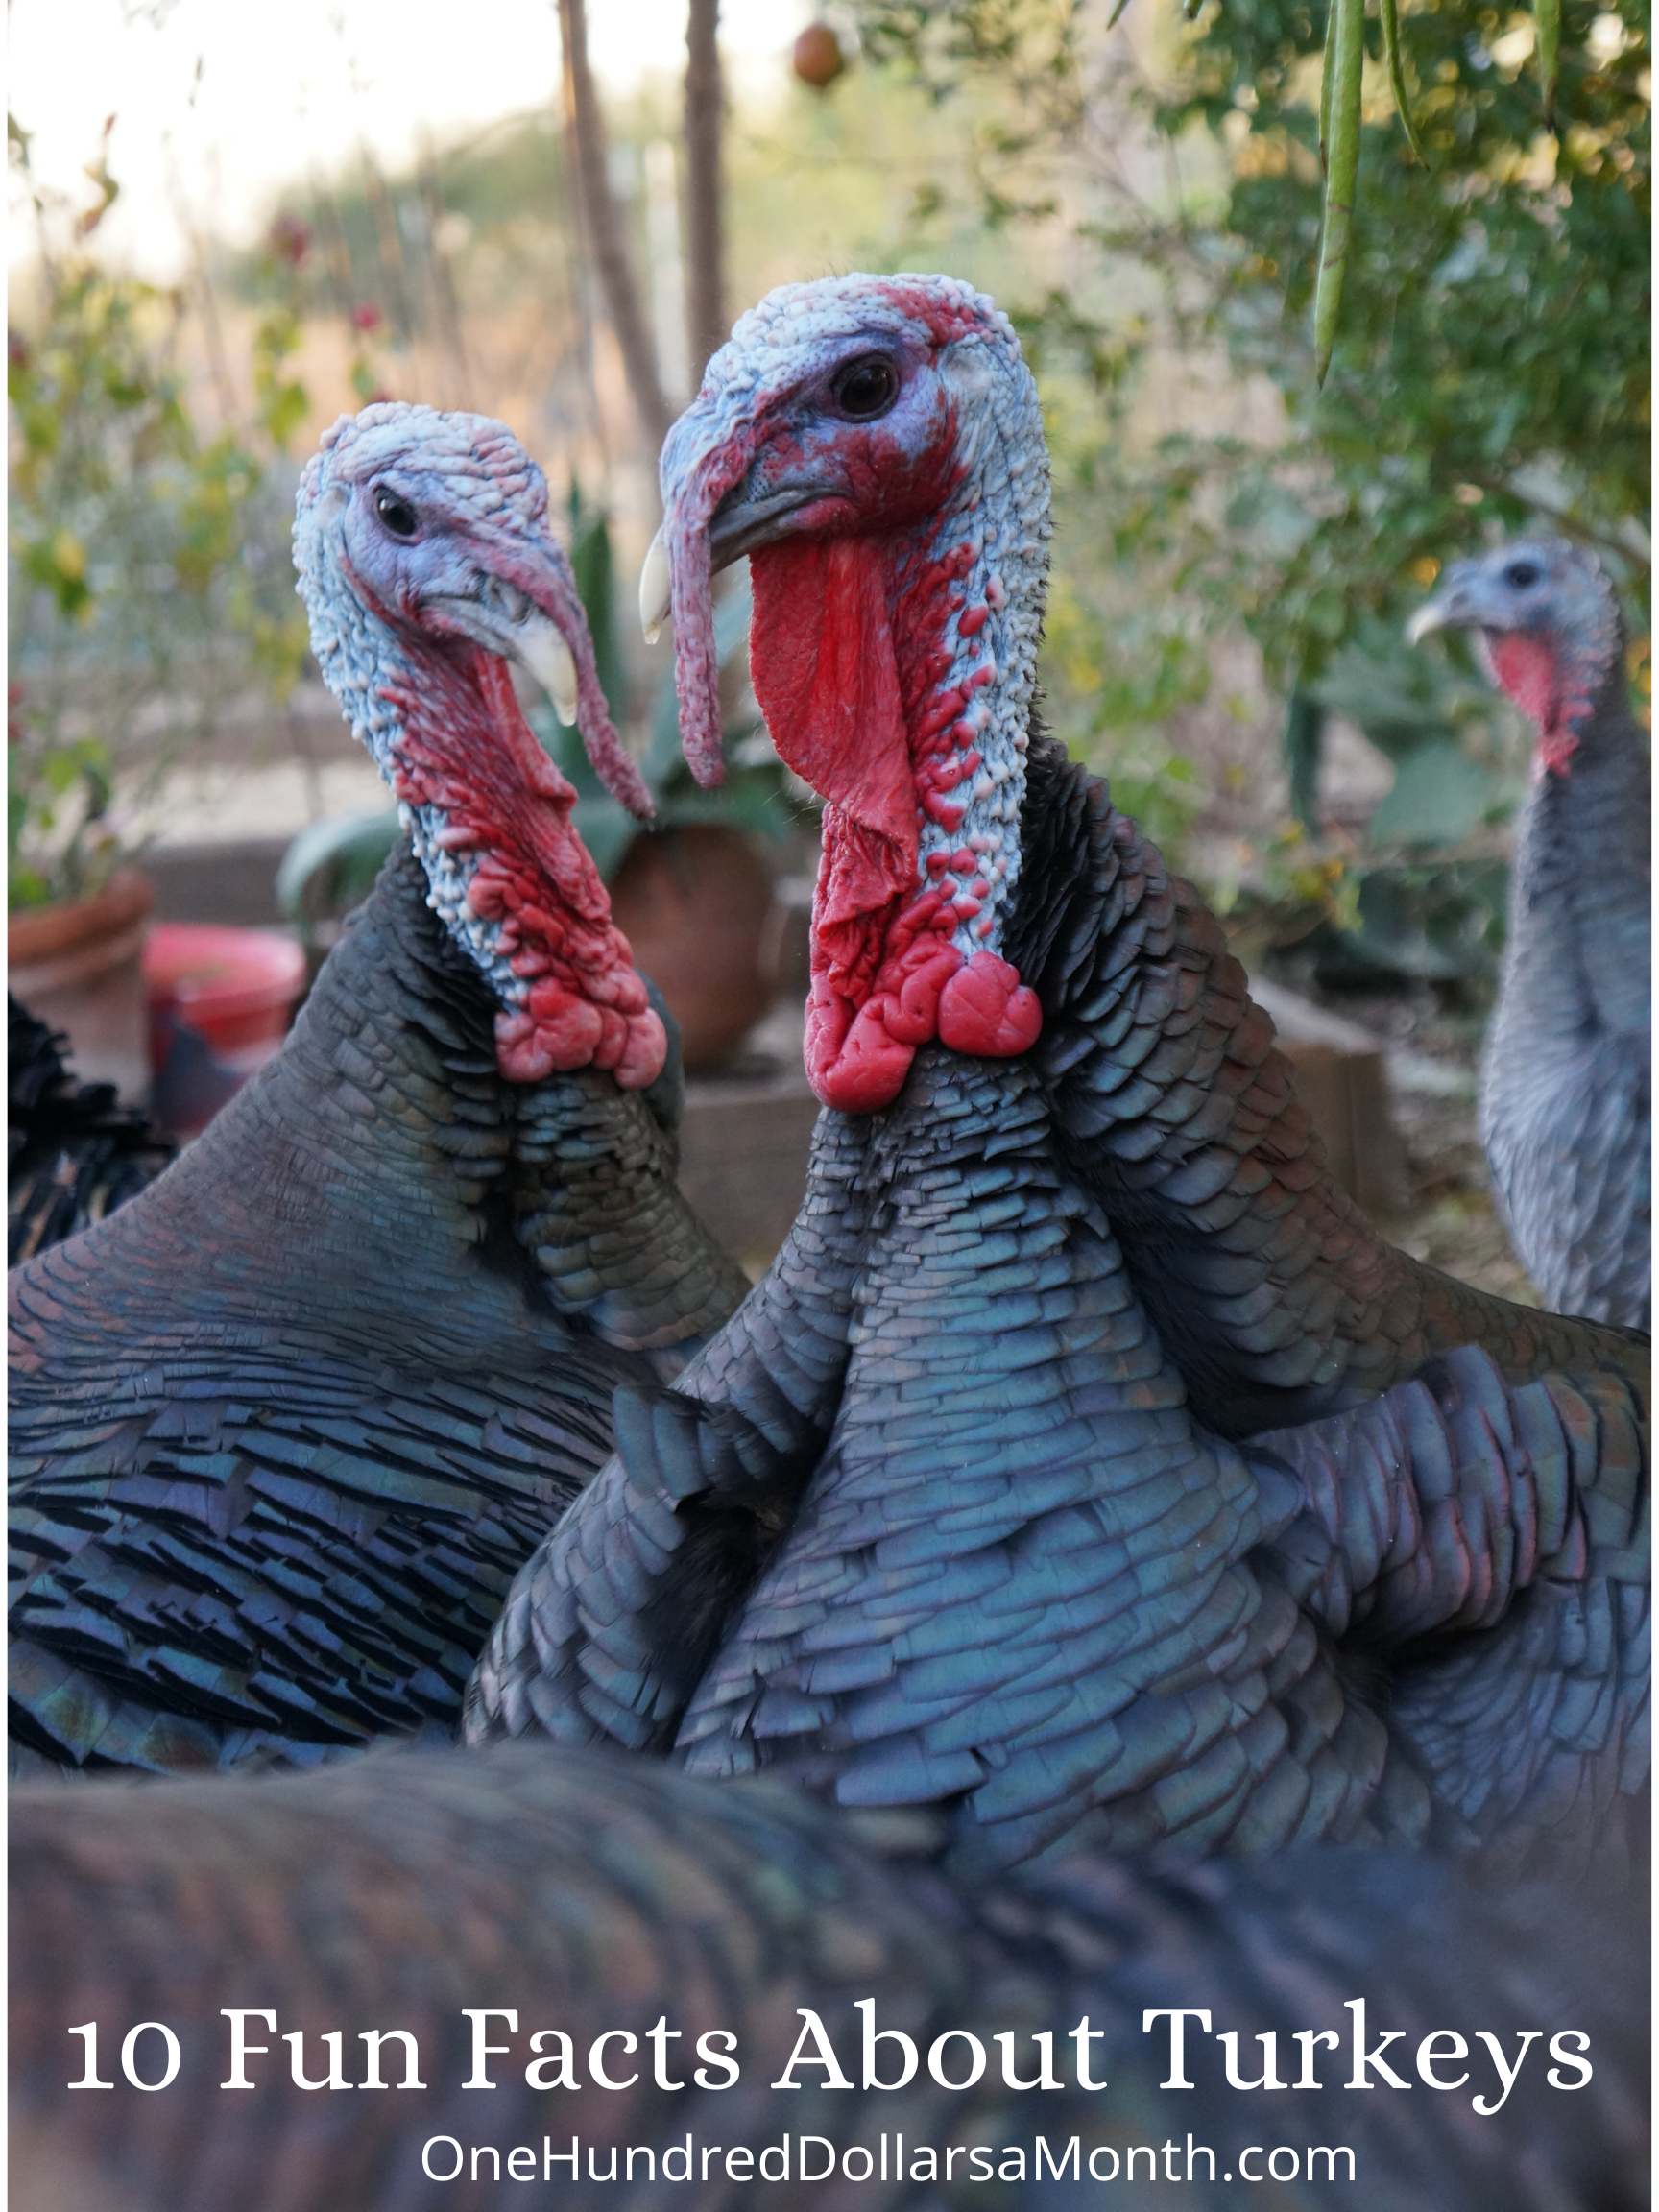 10 Fun Facts About Turkeys